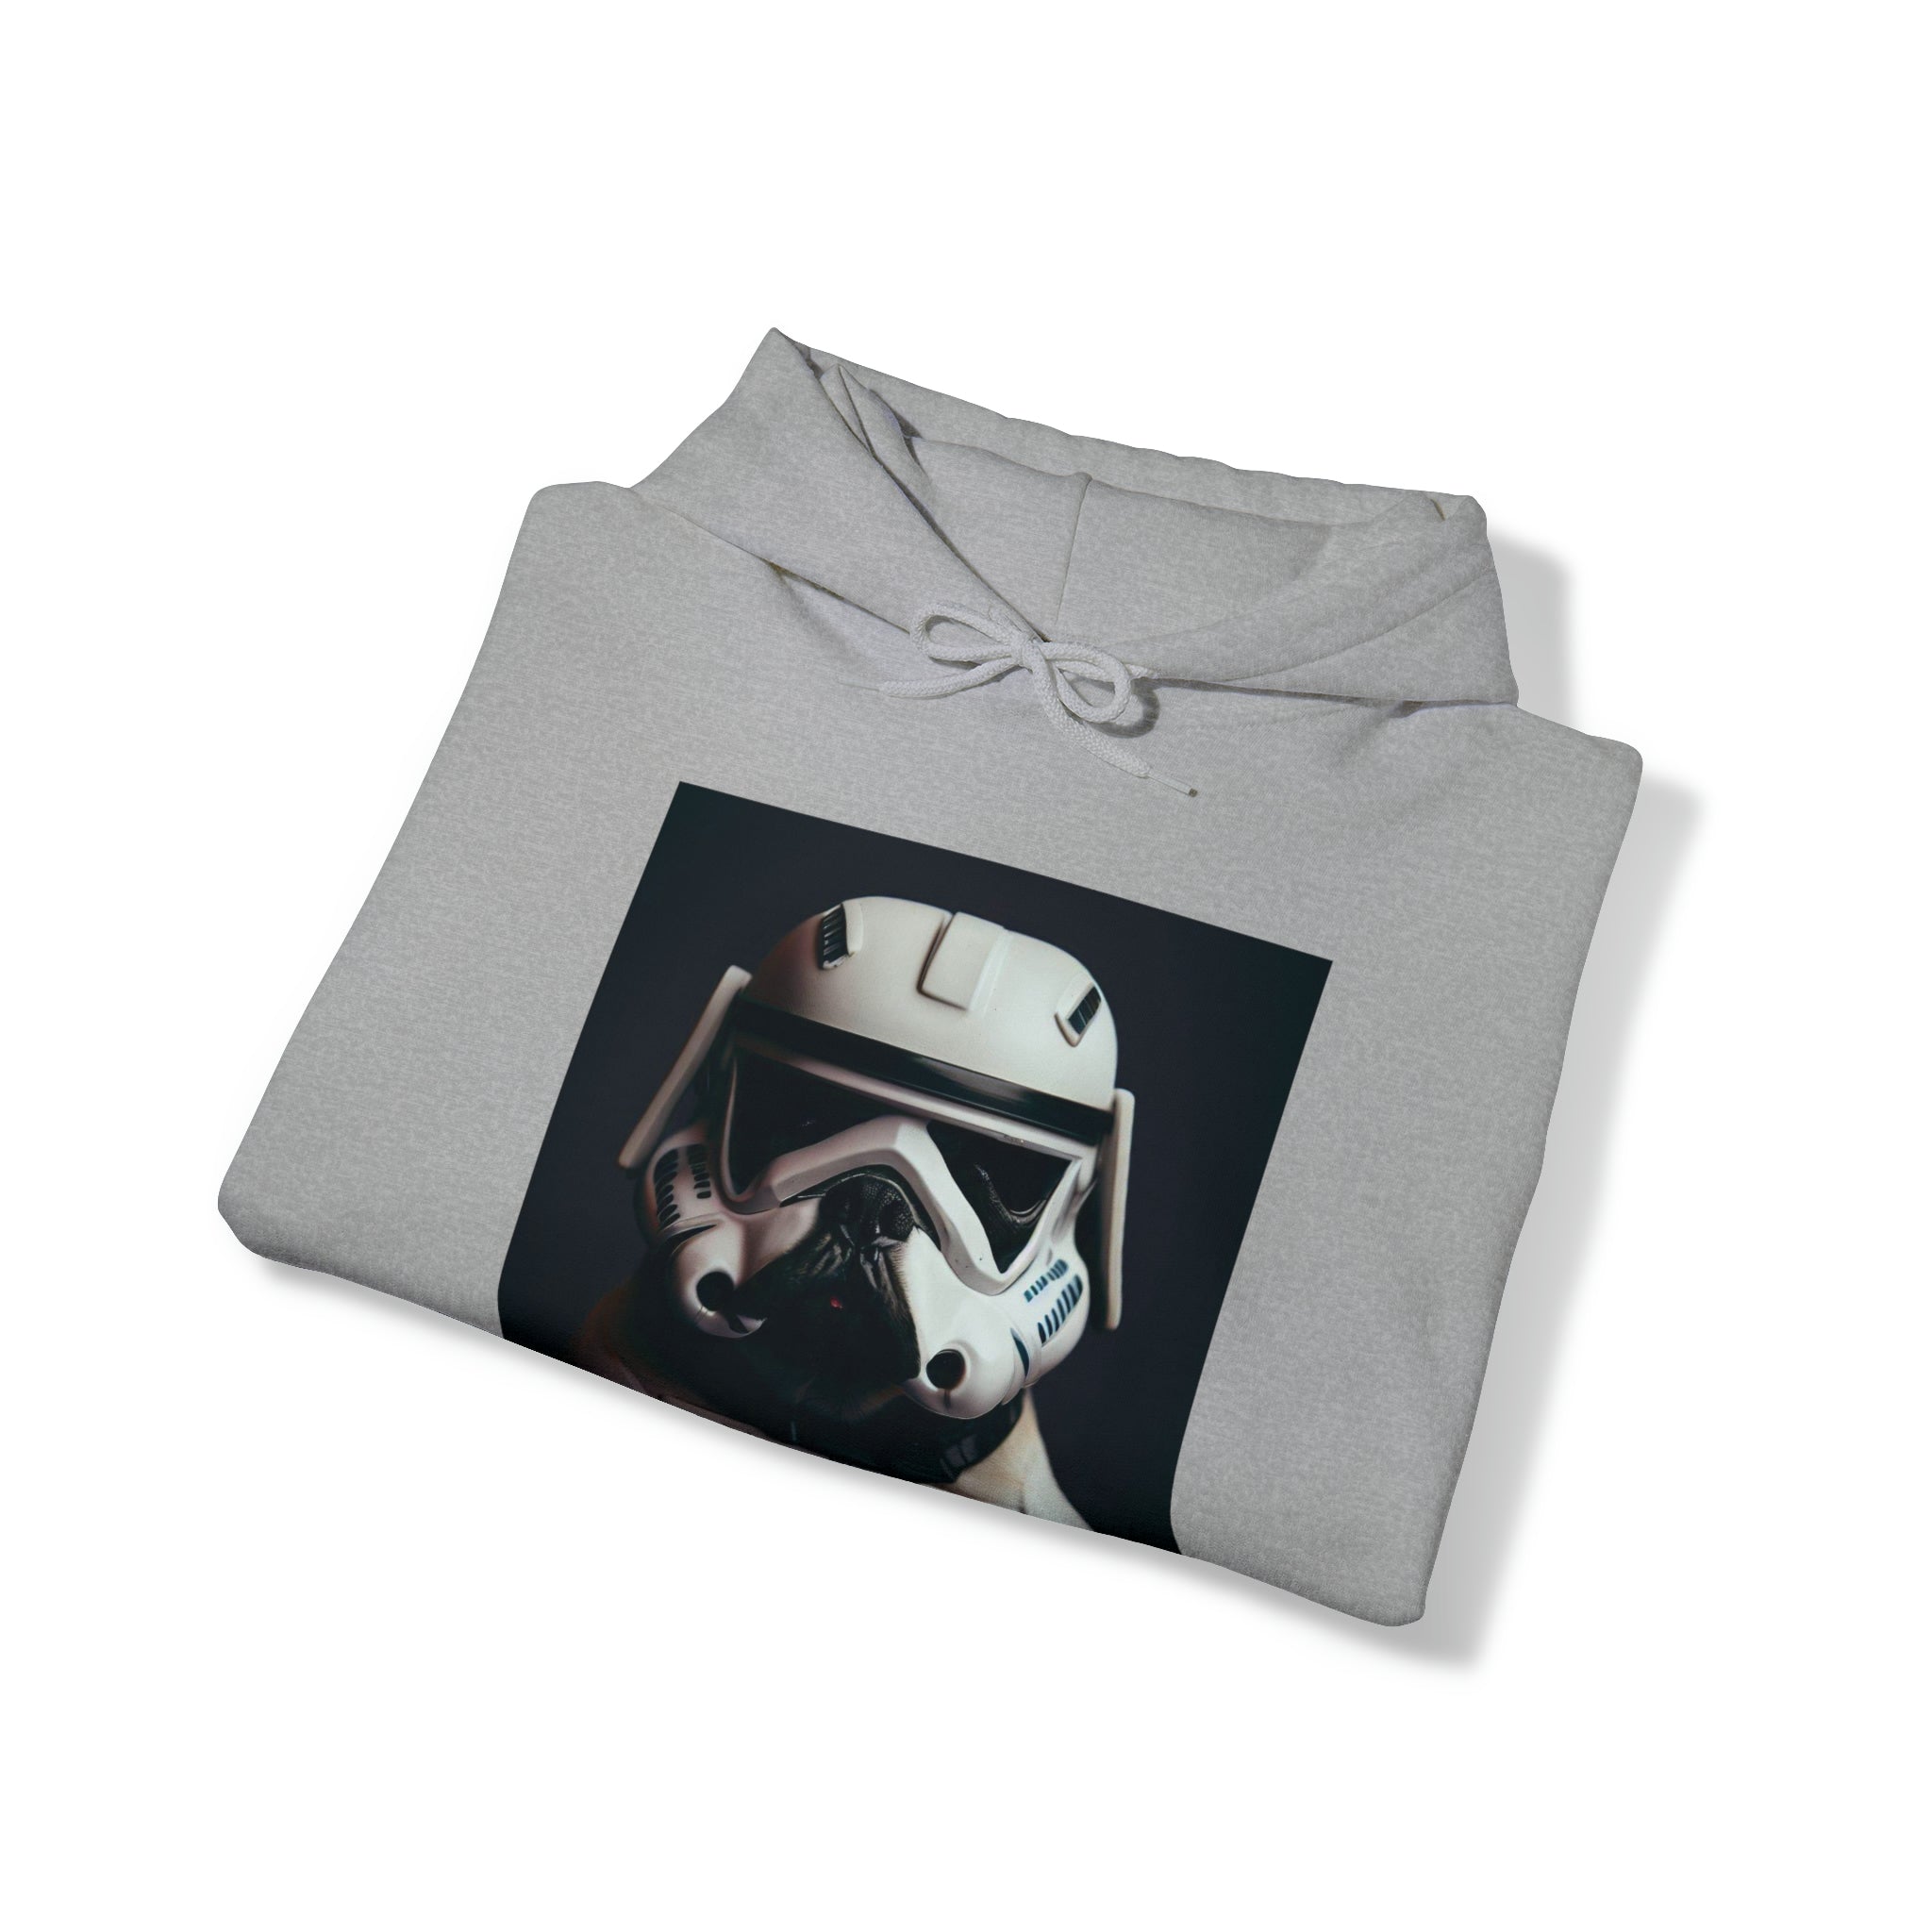 Unisex Heavy Blend™ Hooded Sweatshirt Spugtacular Storm Trooper